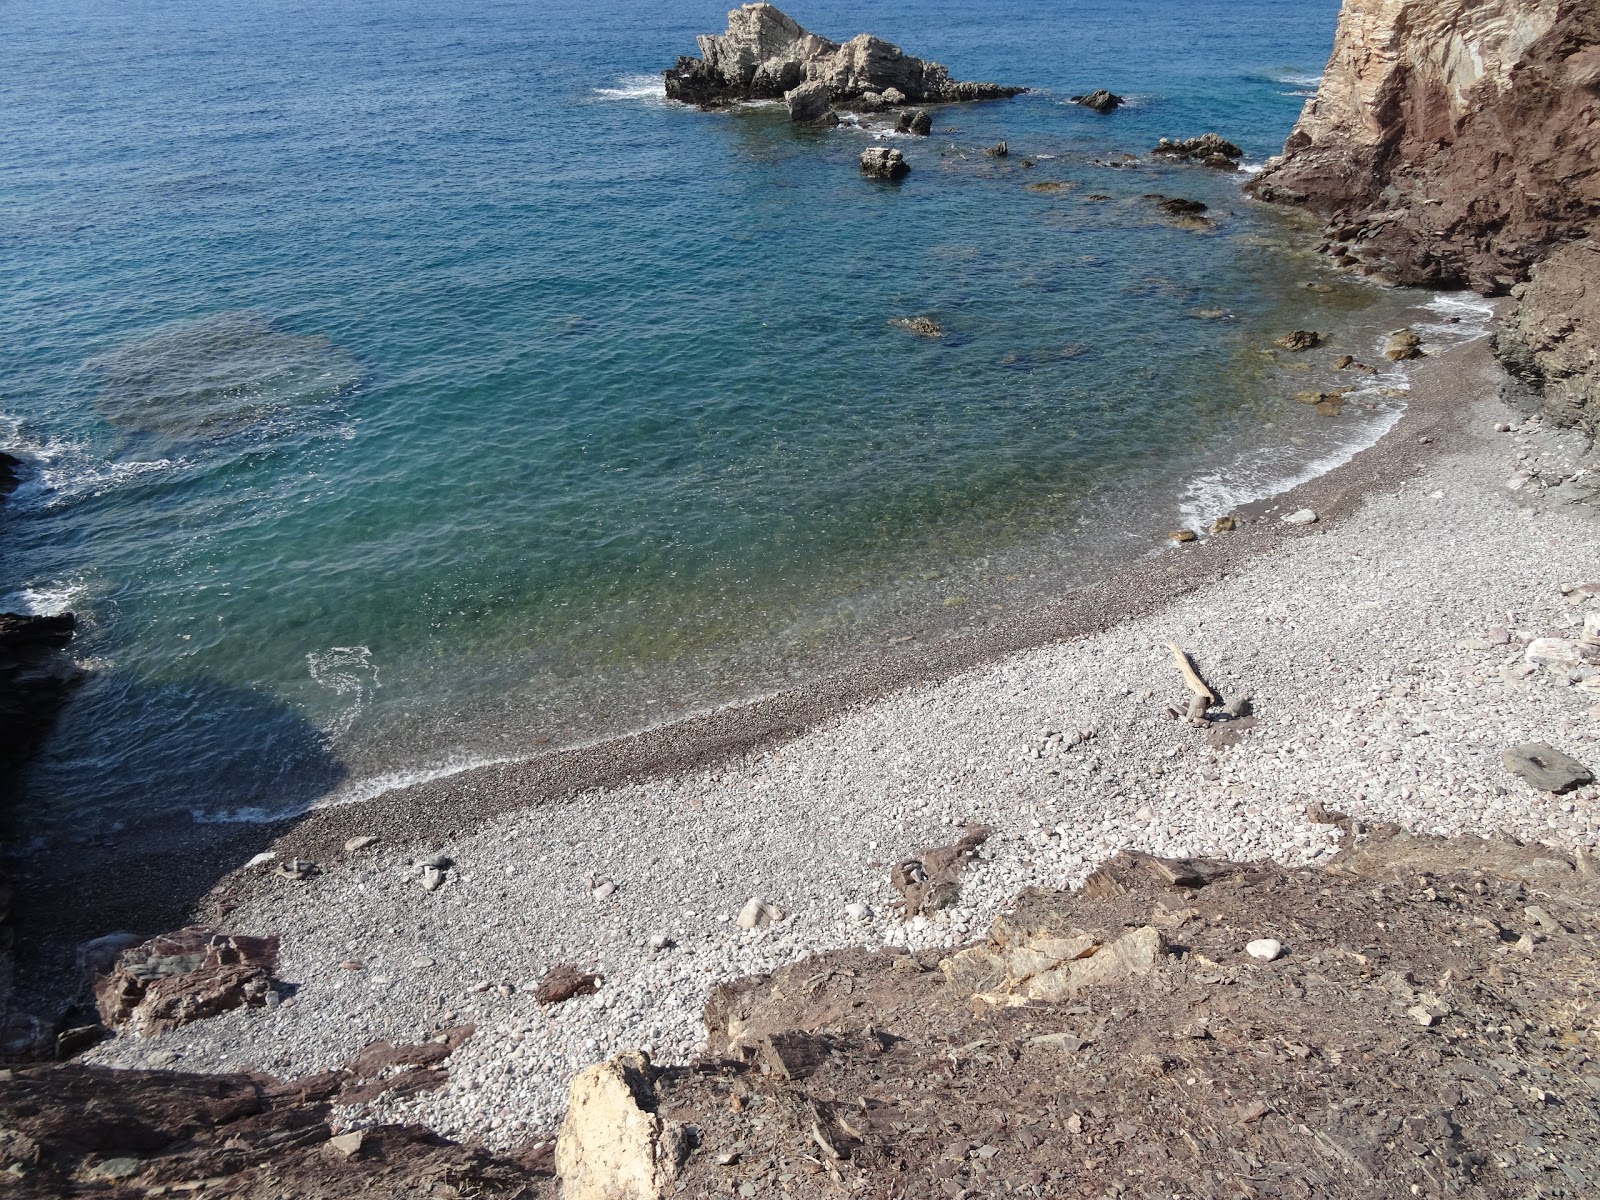 Fotografija Hammam beach z sivi kamenček površino